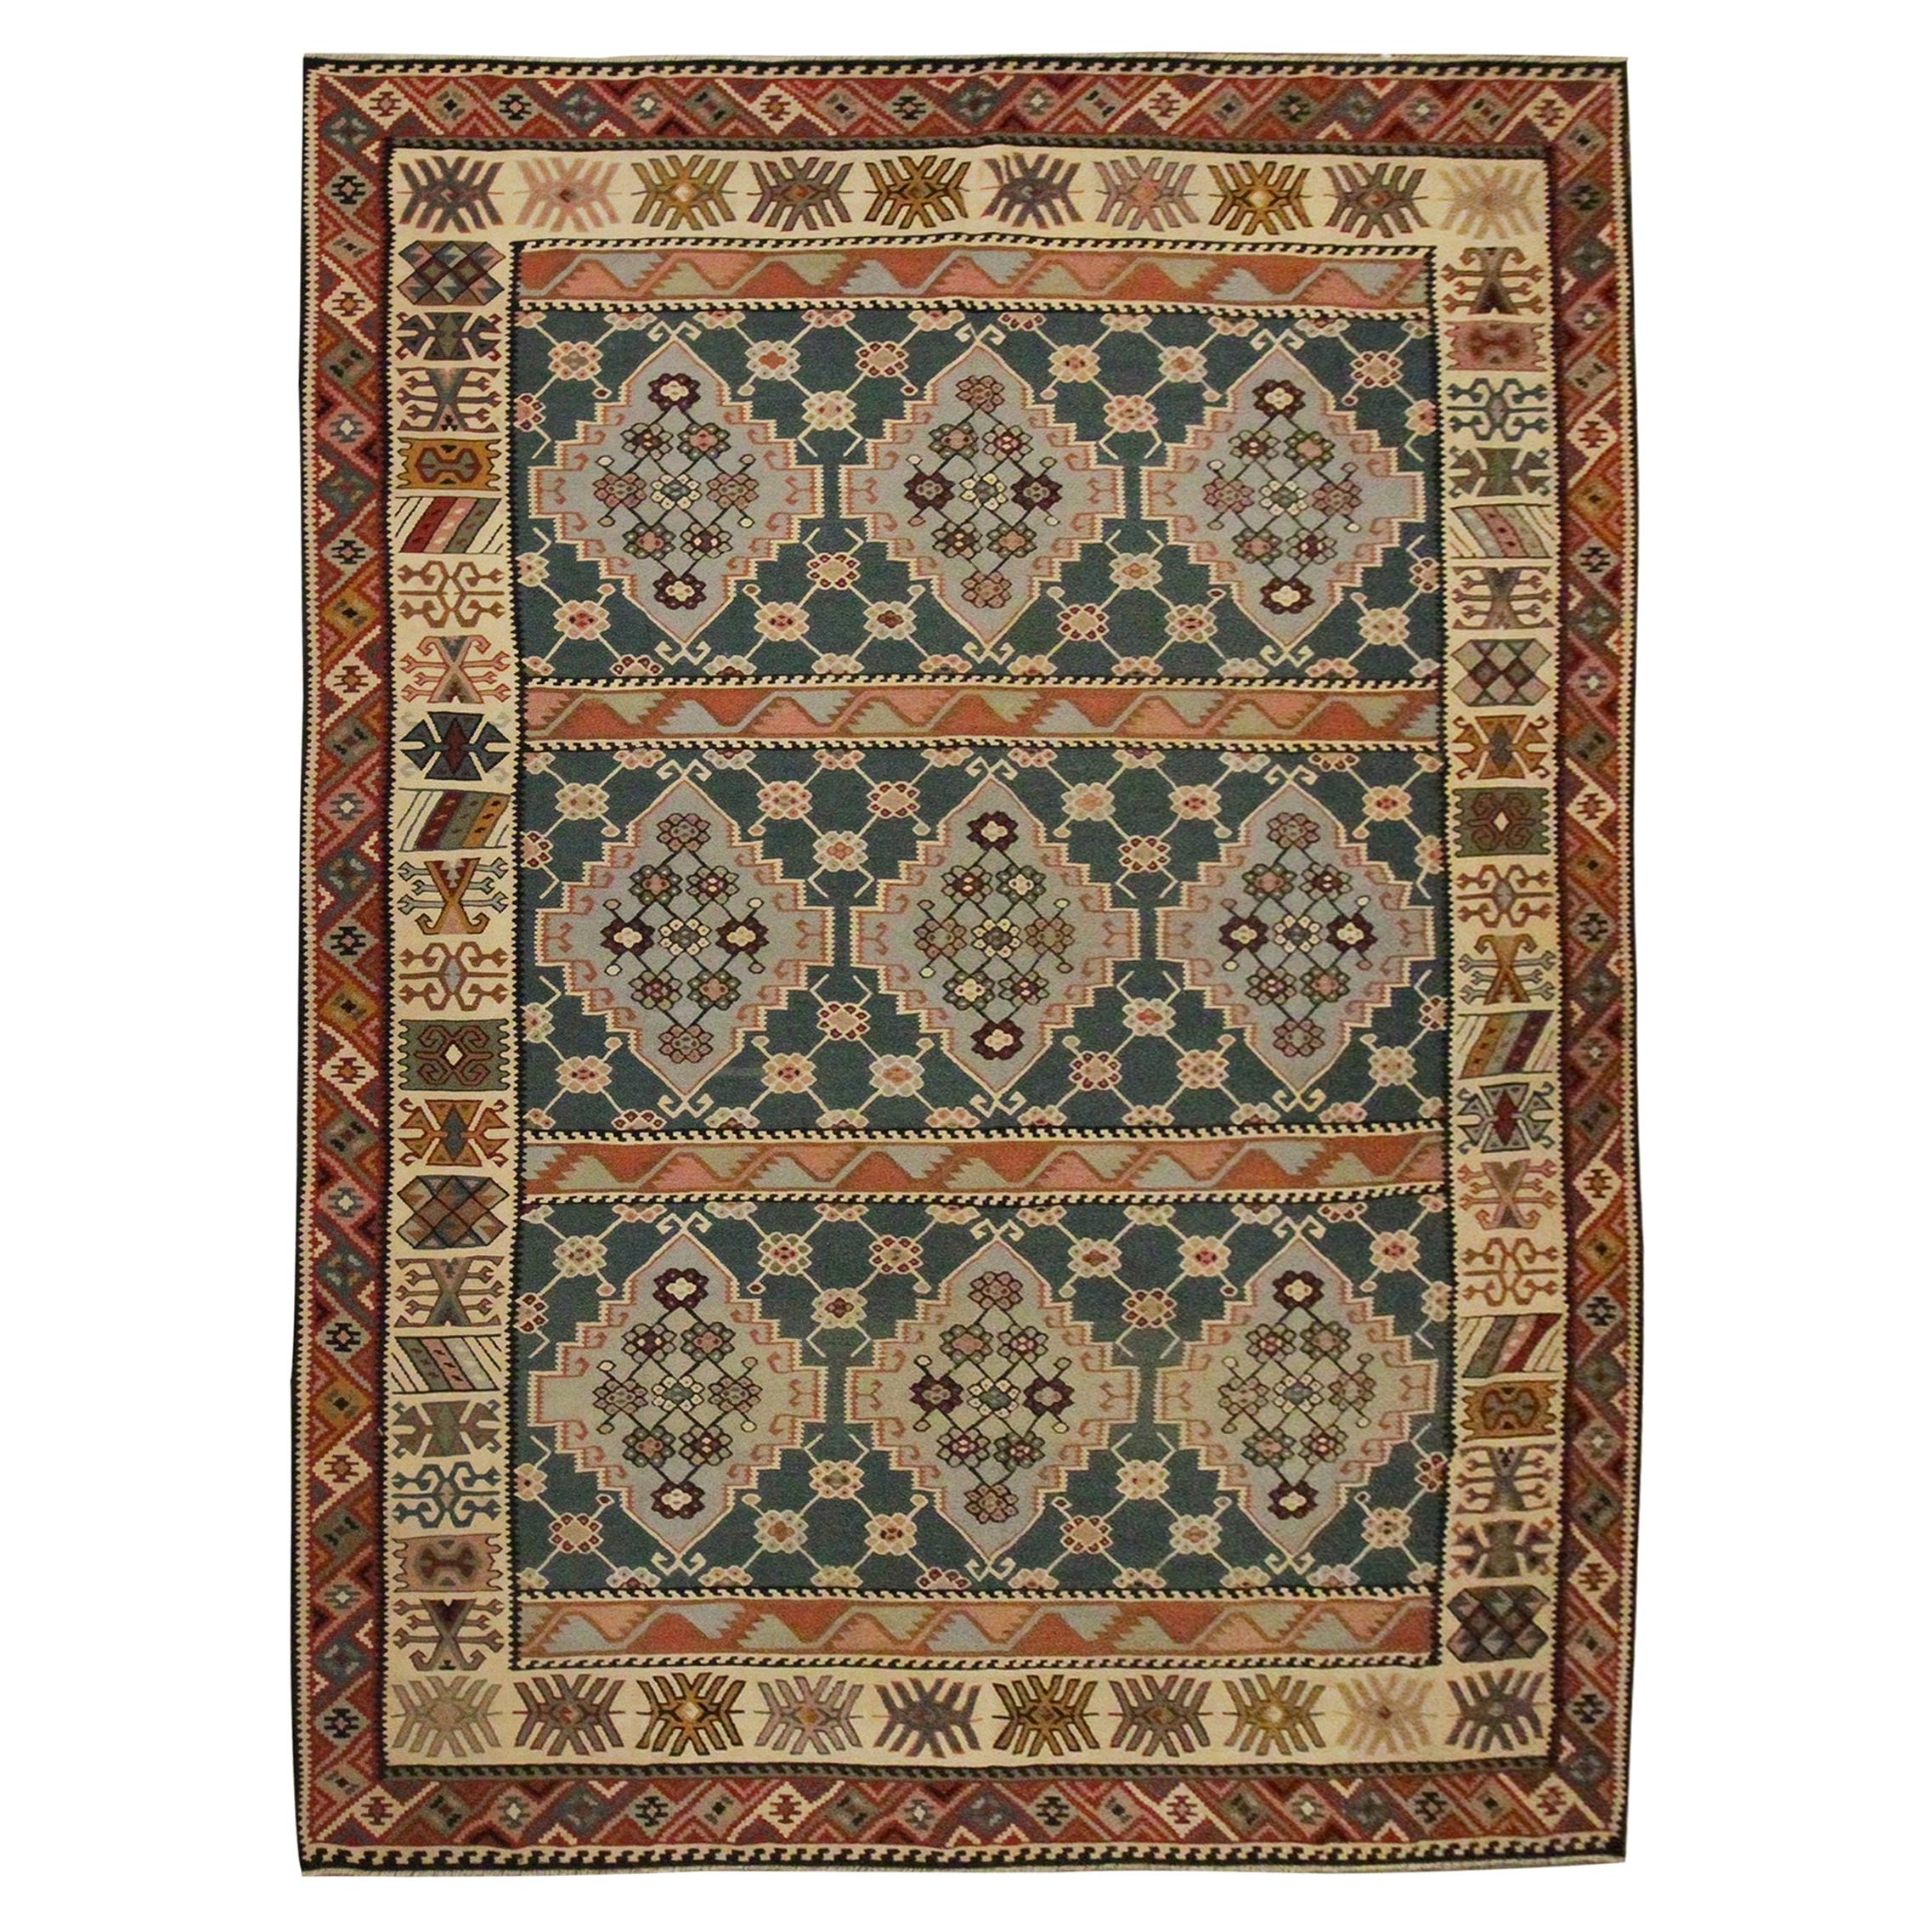 Handmade Turkish Antique Kilim Rug Traditional Flat Woven Wool Carpet